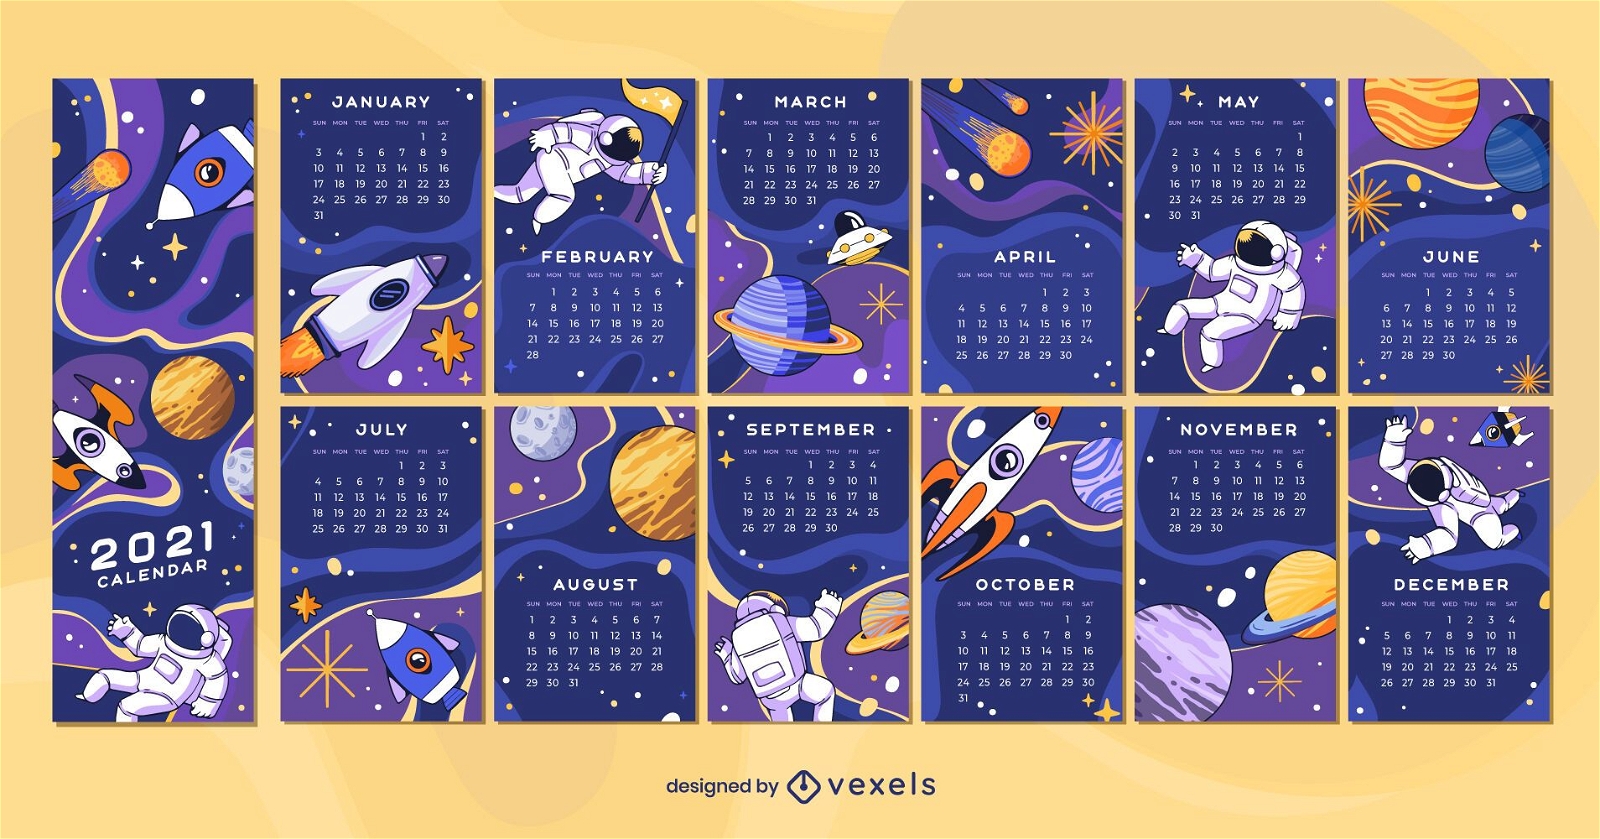 Space 2021 calendar design